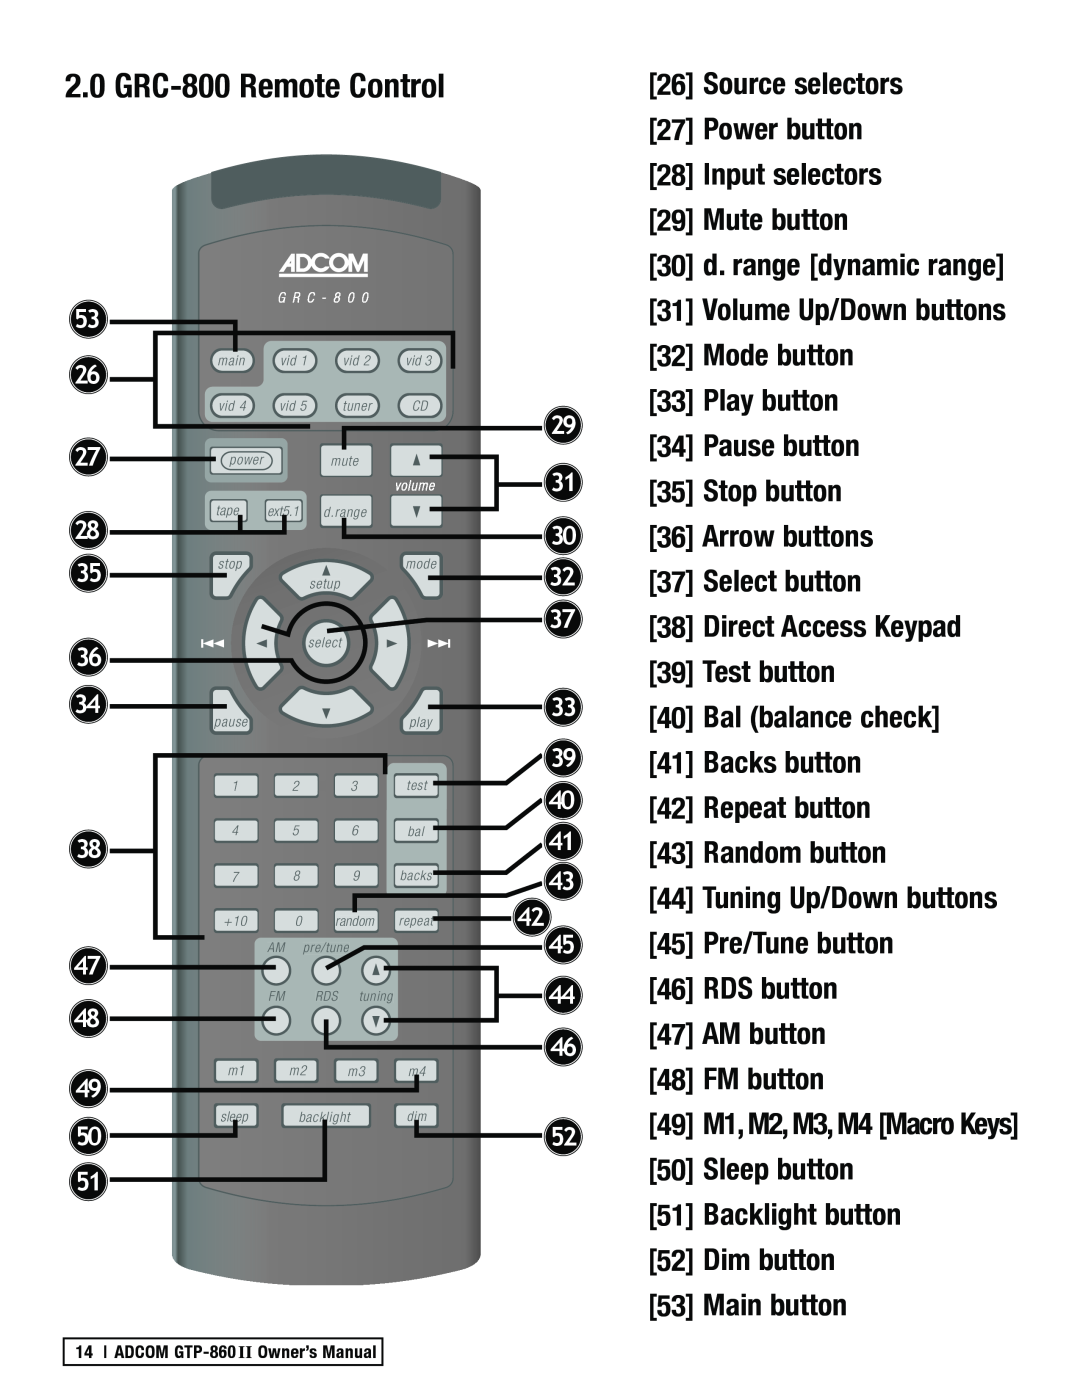 Adcom GTP-860II GRC-800Remote Control, Source selectors 27 Power button, Input selectors 29 Mute button, Random button 